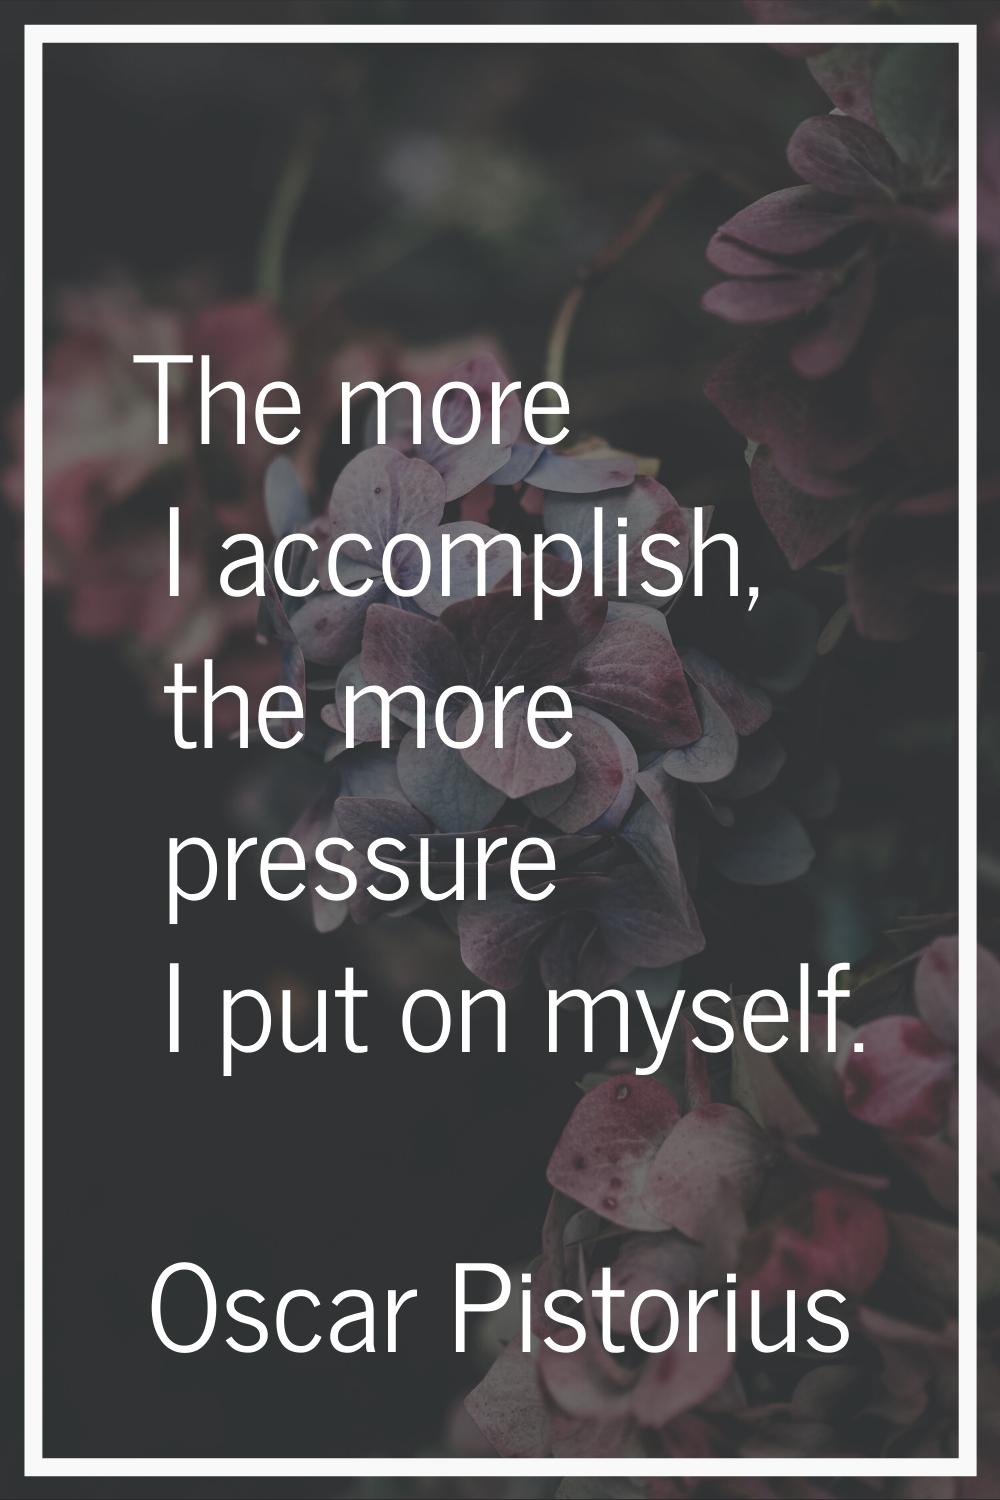 The more I accomplish, the more pressure I put on myself.